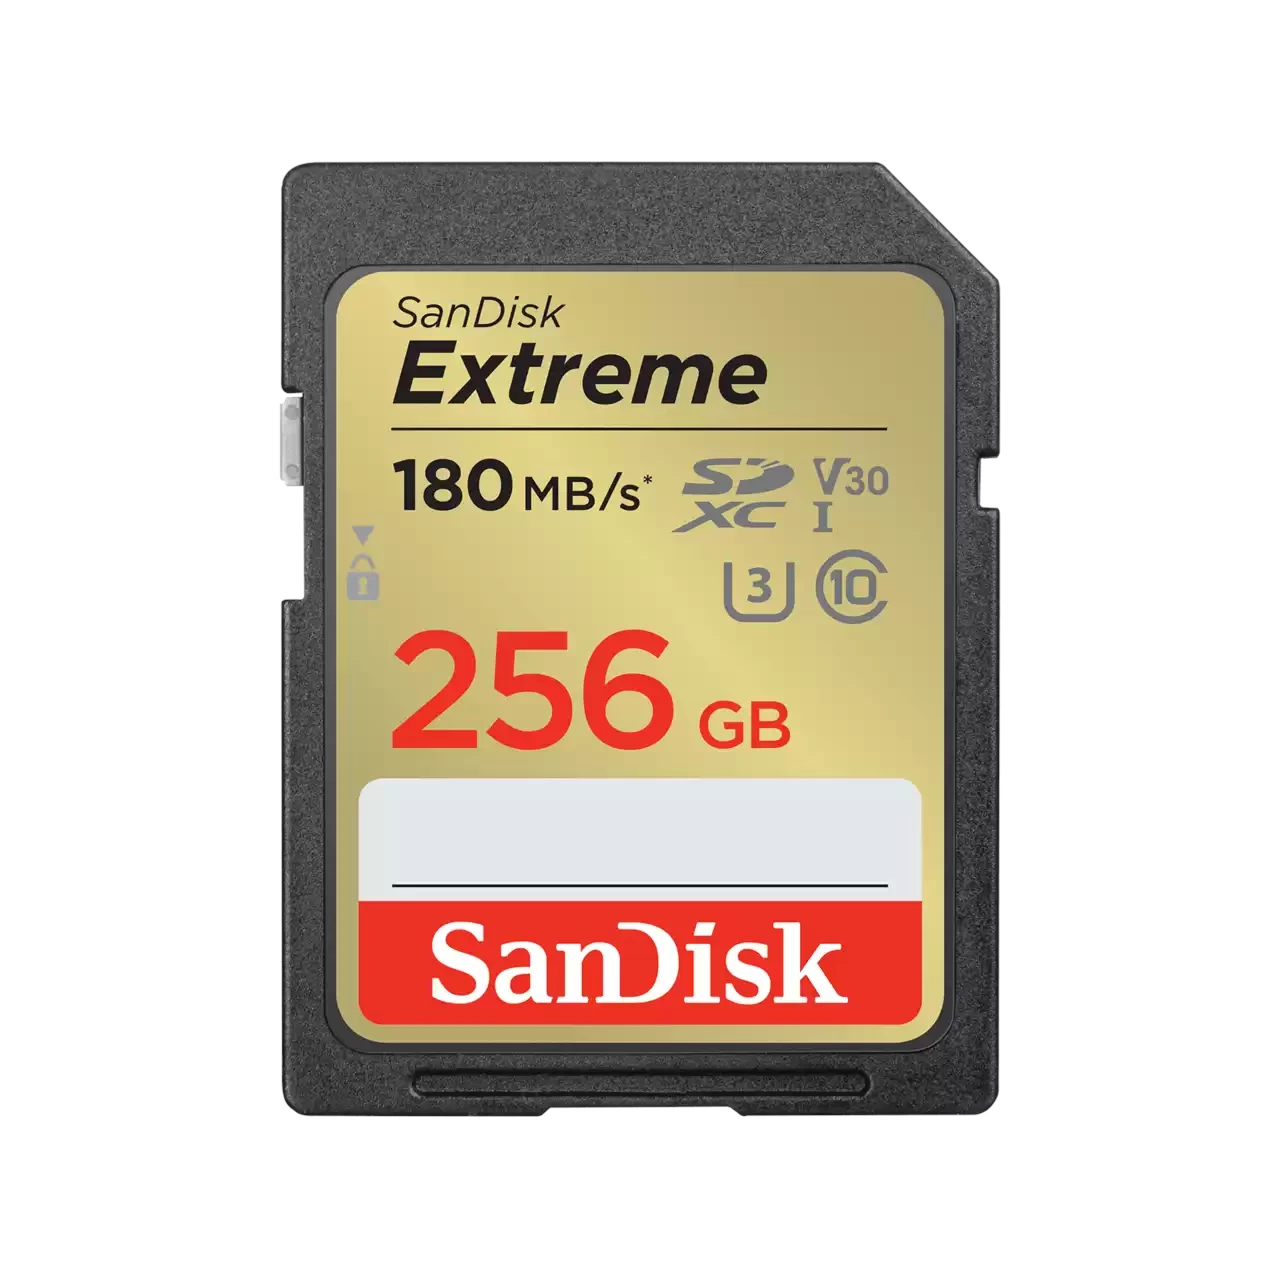 Sandisk Extreme 256Gb SDXC UHS-I Memory Card #sDsDXVV-256g-gNCiN